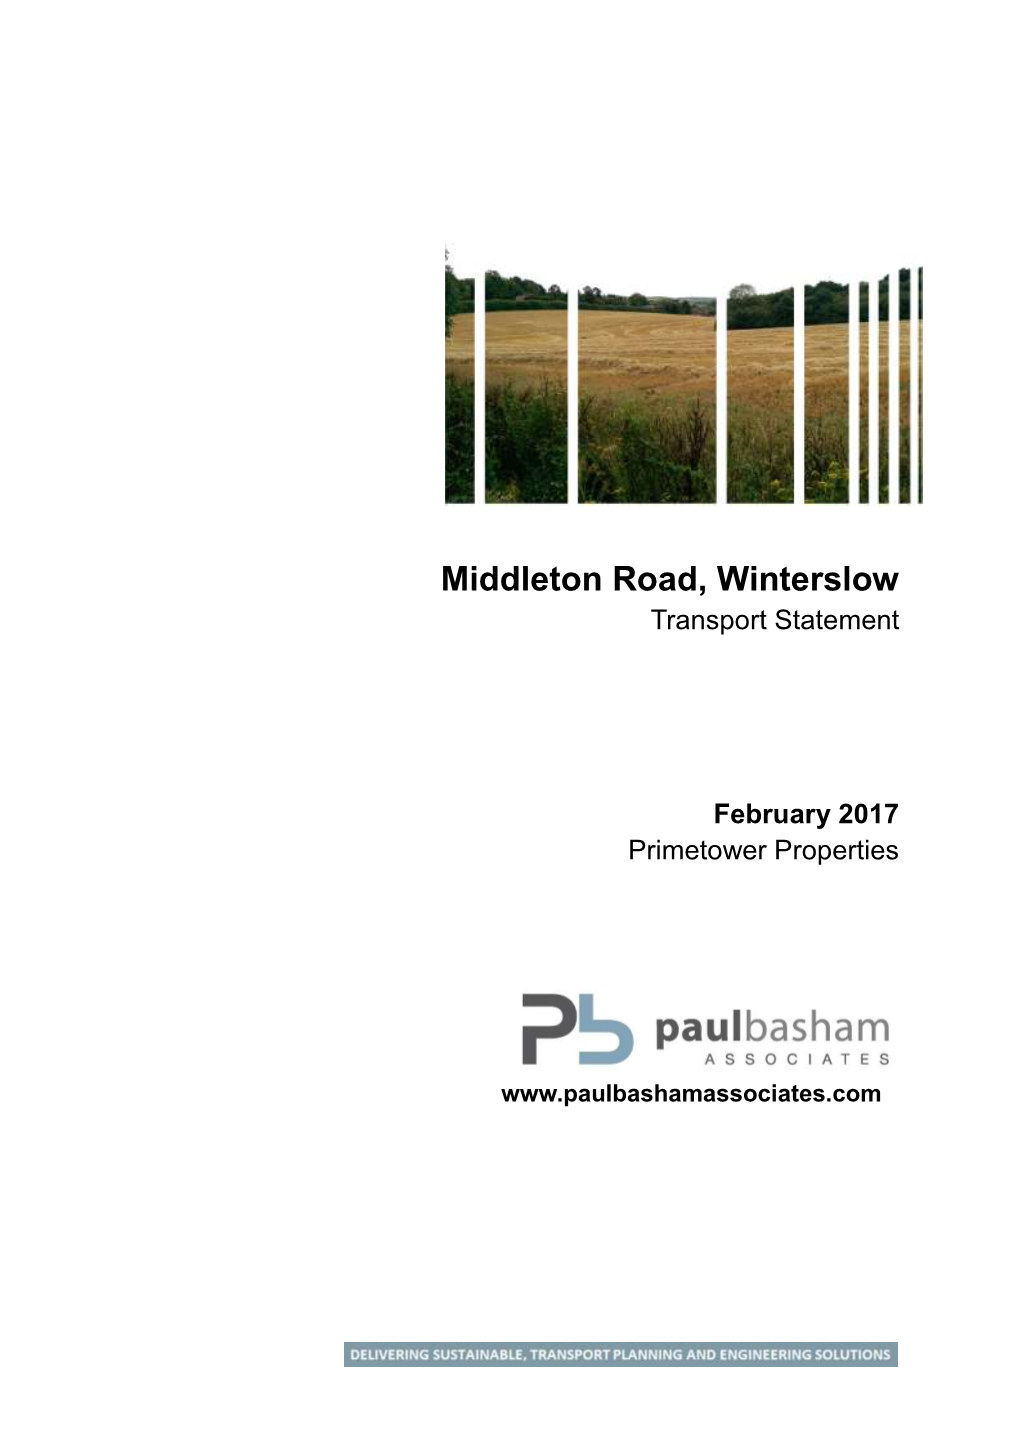 Middleton Road, Winterslow Transport Statement